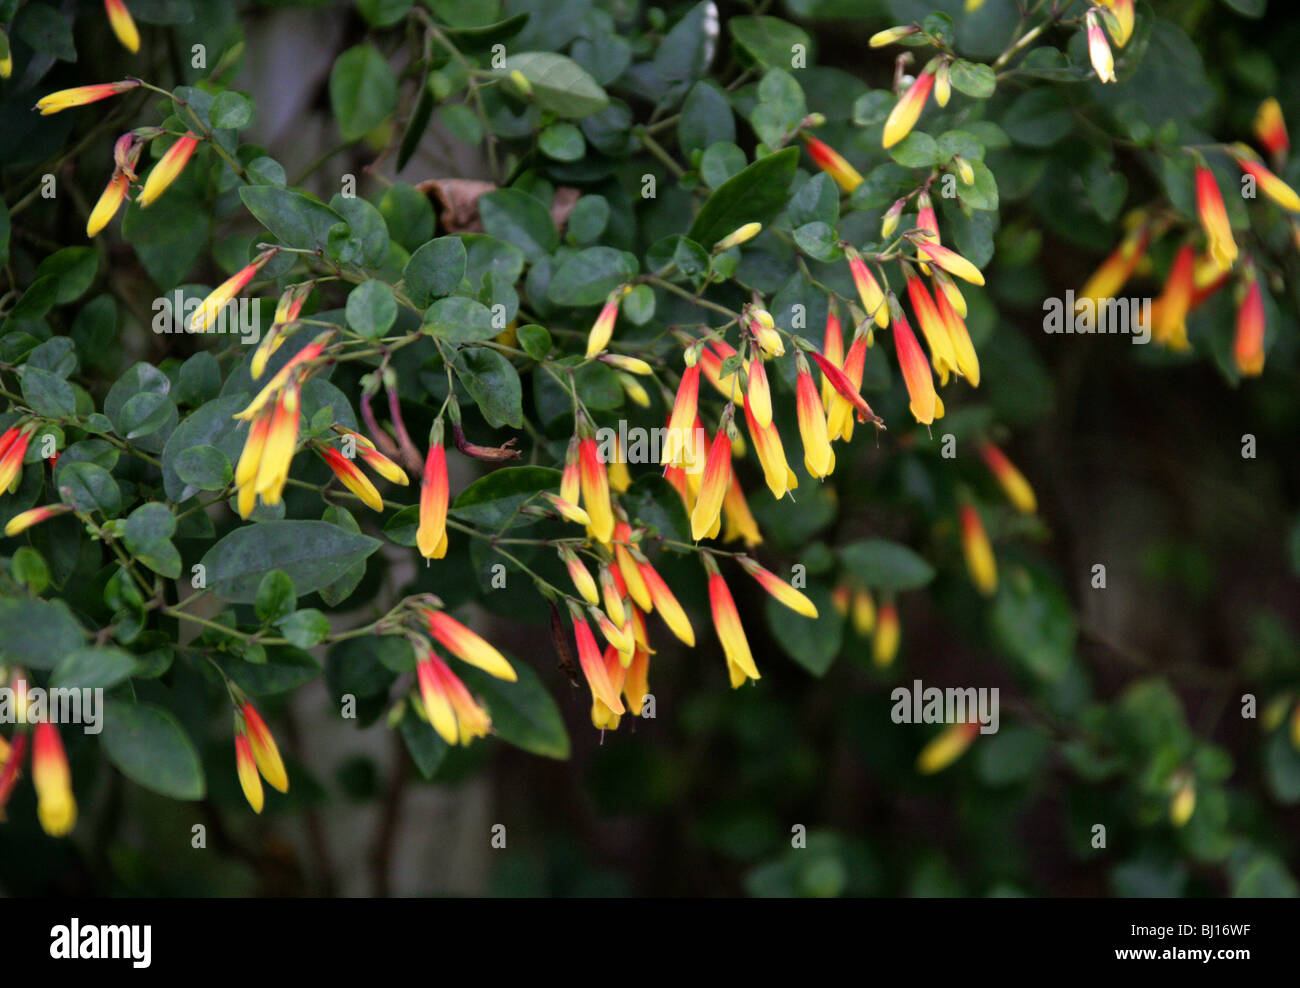 Red Wing, Heteropterys glabra, Malpighiaceae, Barbados Cherry Family. Stock Photo